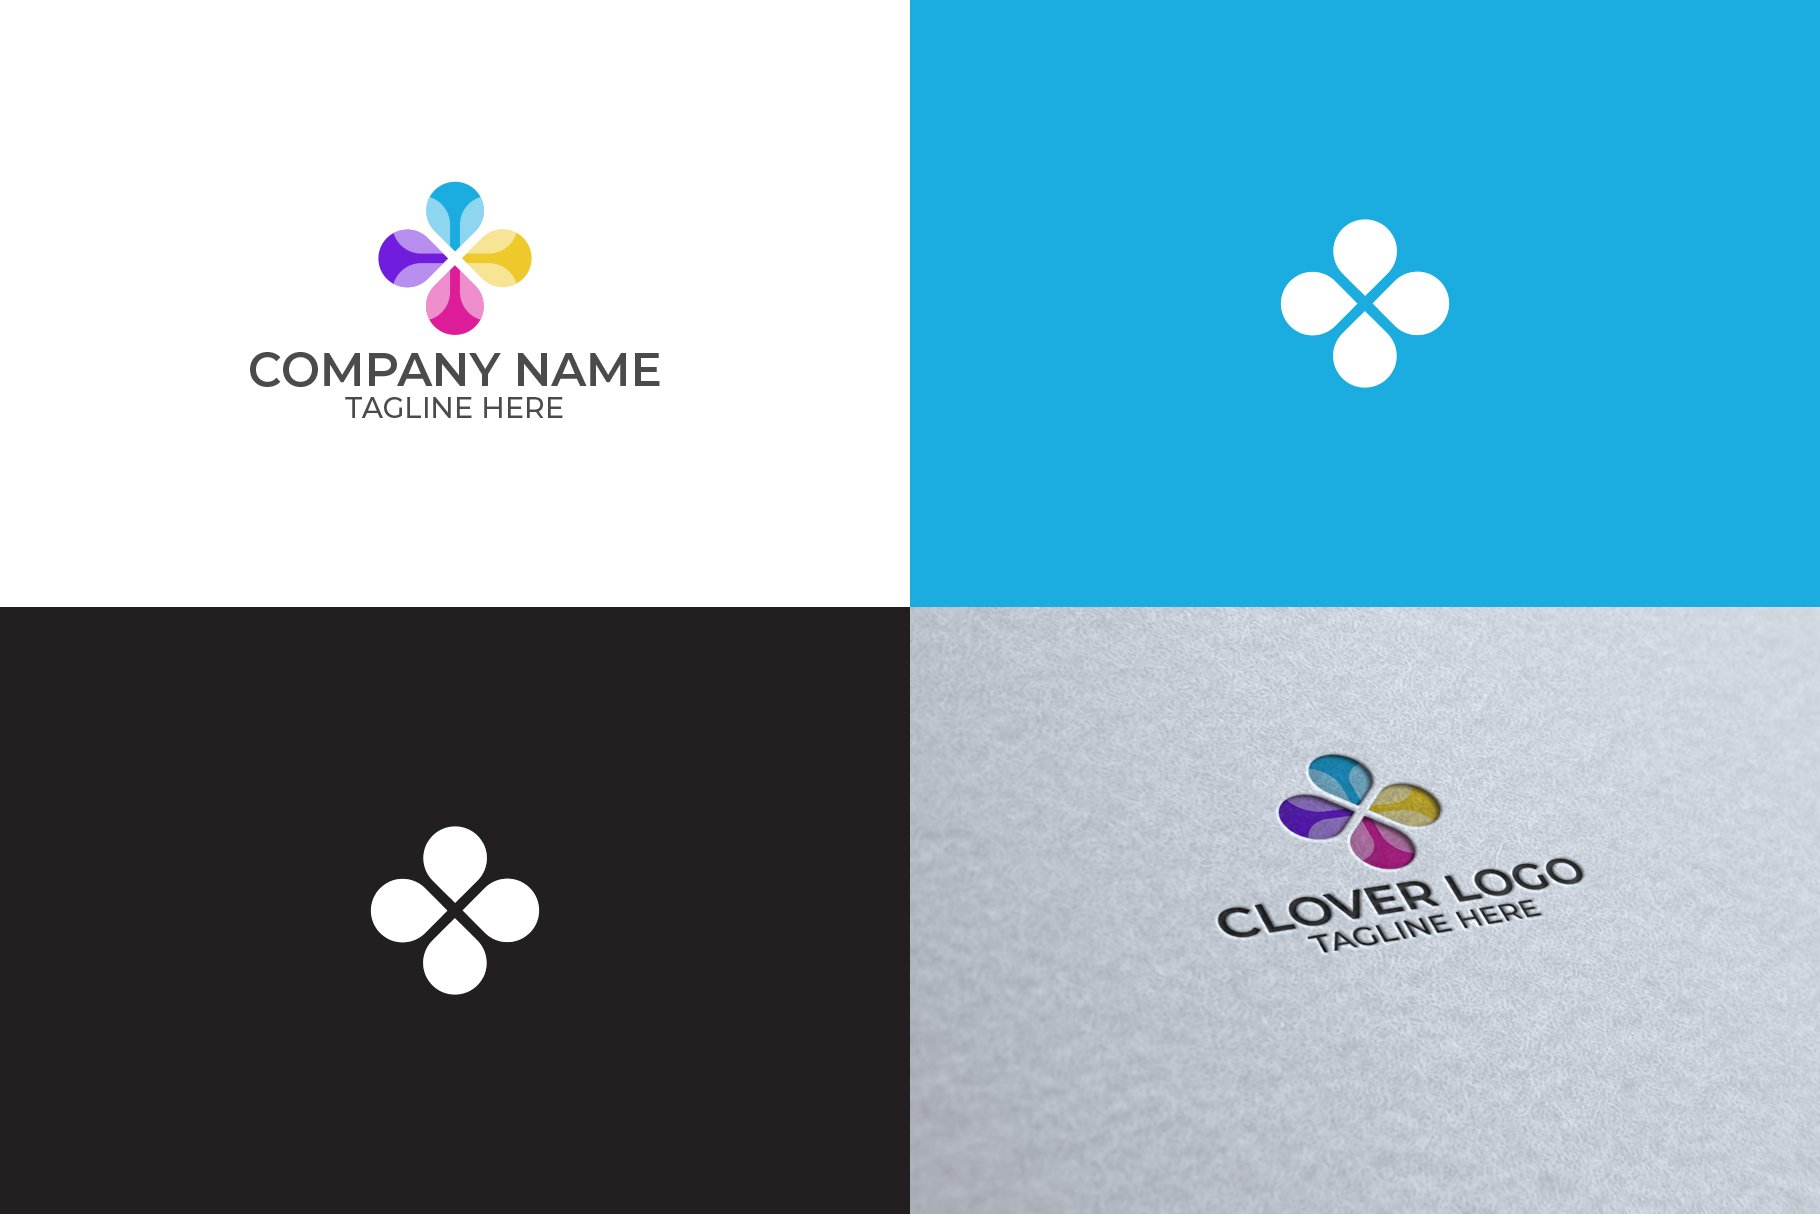 Clover Logo Design preview image.